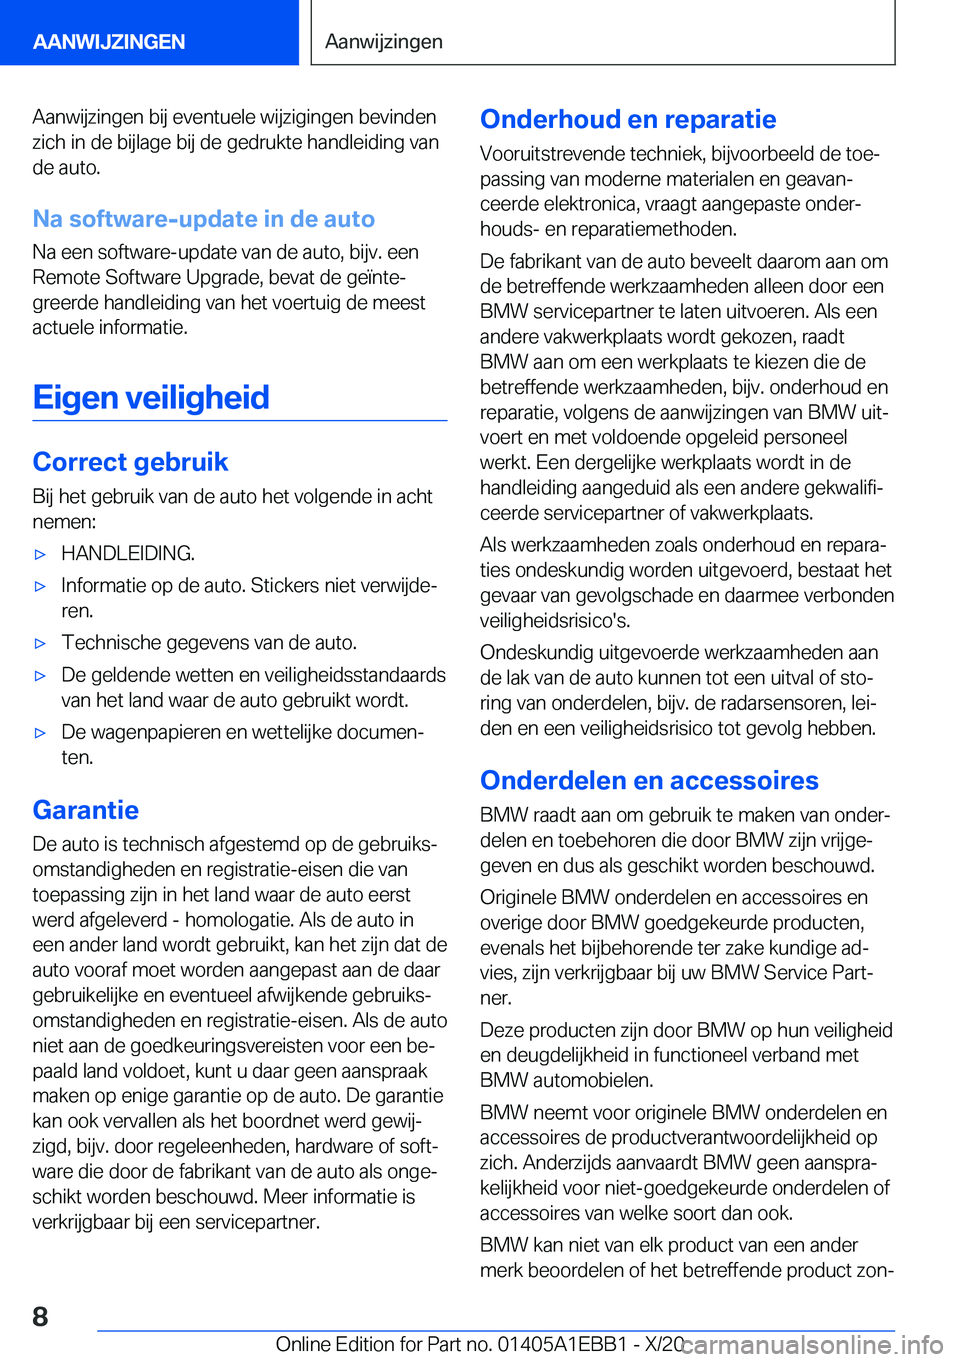 BMW 3 SERIES 2021  Instructieboekjes (in Dutch) �A�a�n�w�i�j�z�i�n�g�e�n��b�i�j��e�v�e�n�t�u�e�l�e��w�i�j�z�i�g�i�n�g�e�n��b�e�v�i�n�d�e�n�z�i�c�h��i�n��d�e��b�i�j�l�a�g�e��b�i�j��d�e��g�e�d�r�u�k�t�e��h�a�n�d�l�e�i�d�i�n�g��v�a�n
�d�e�